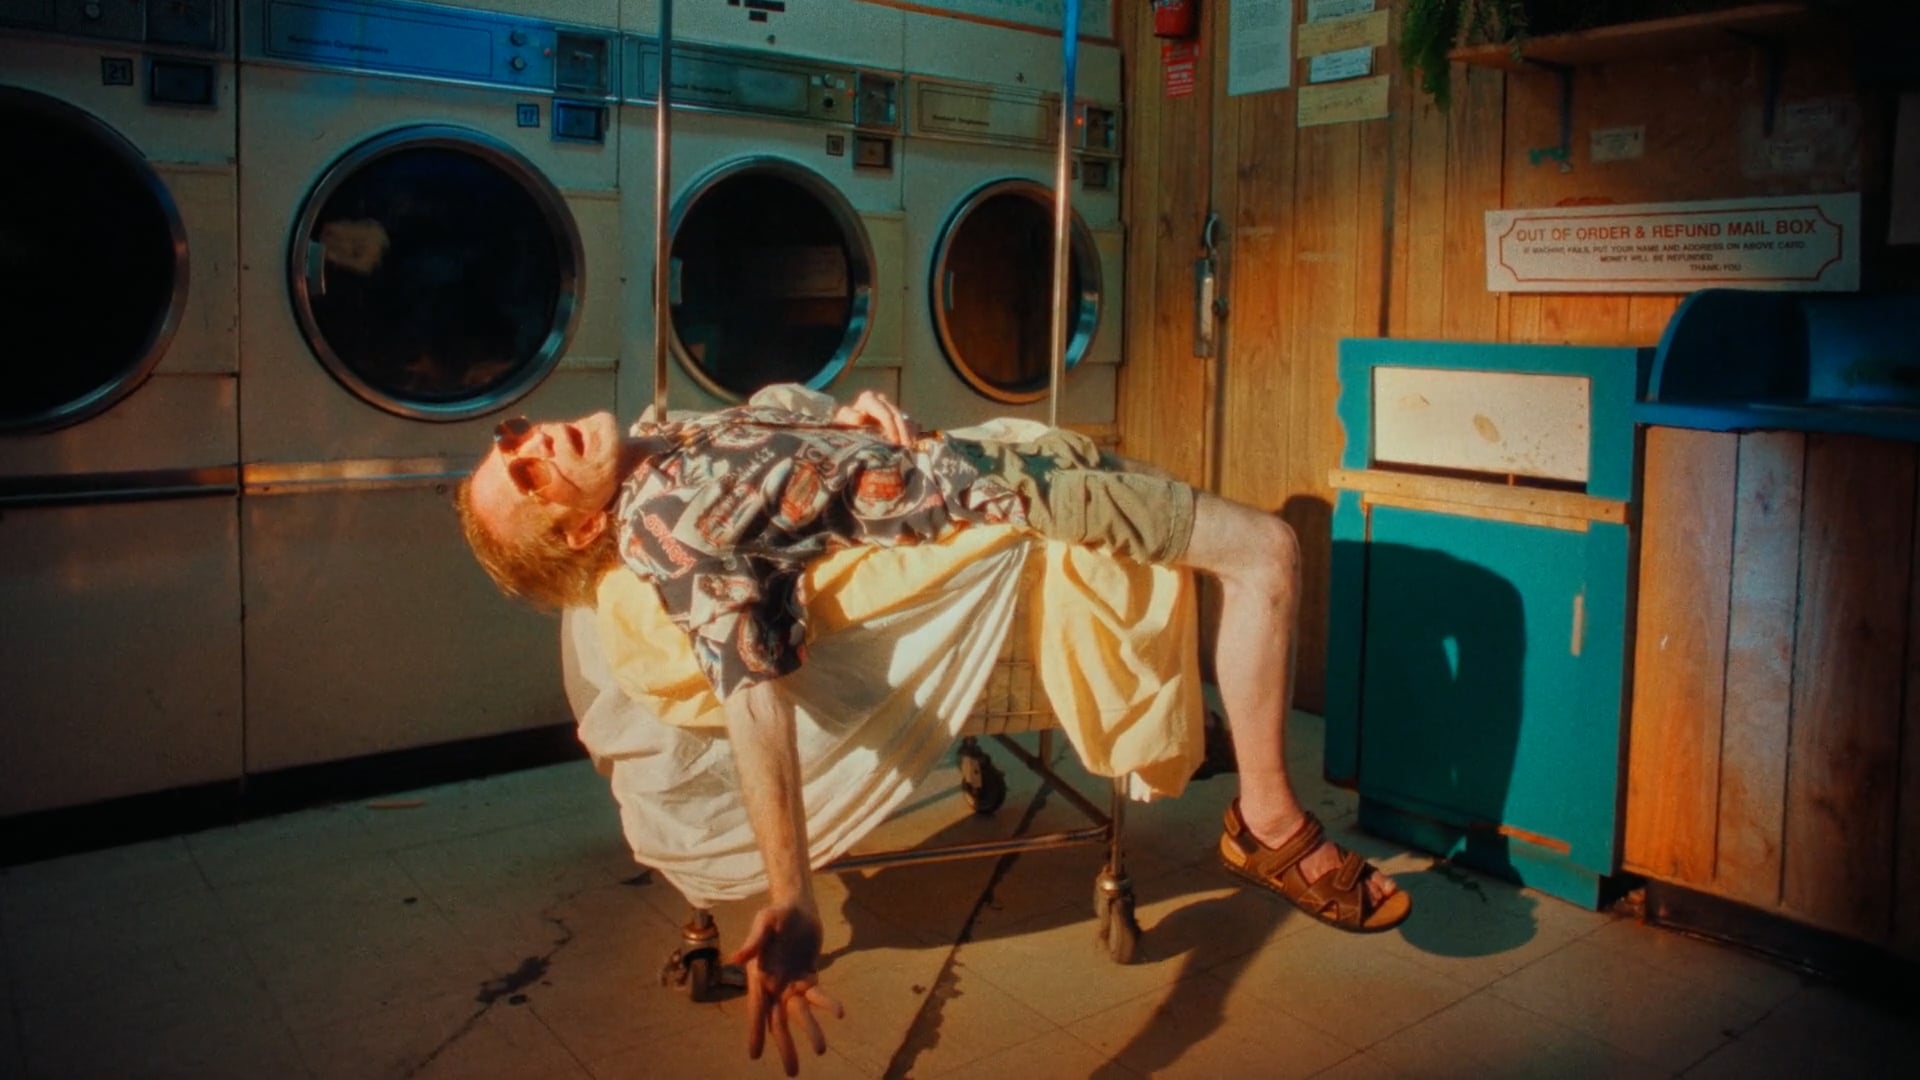 Ryan Patrick ▲ Rinse - The future of Laundry